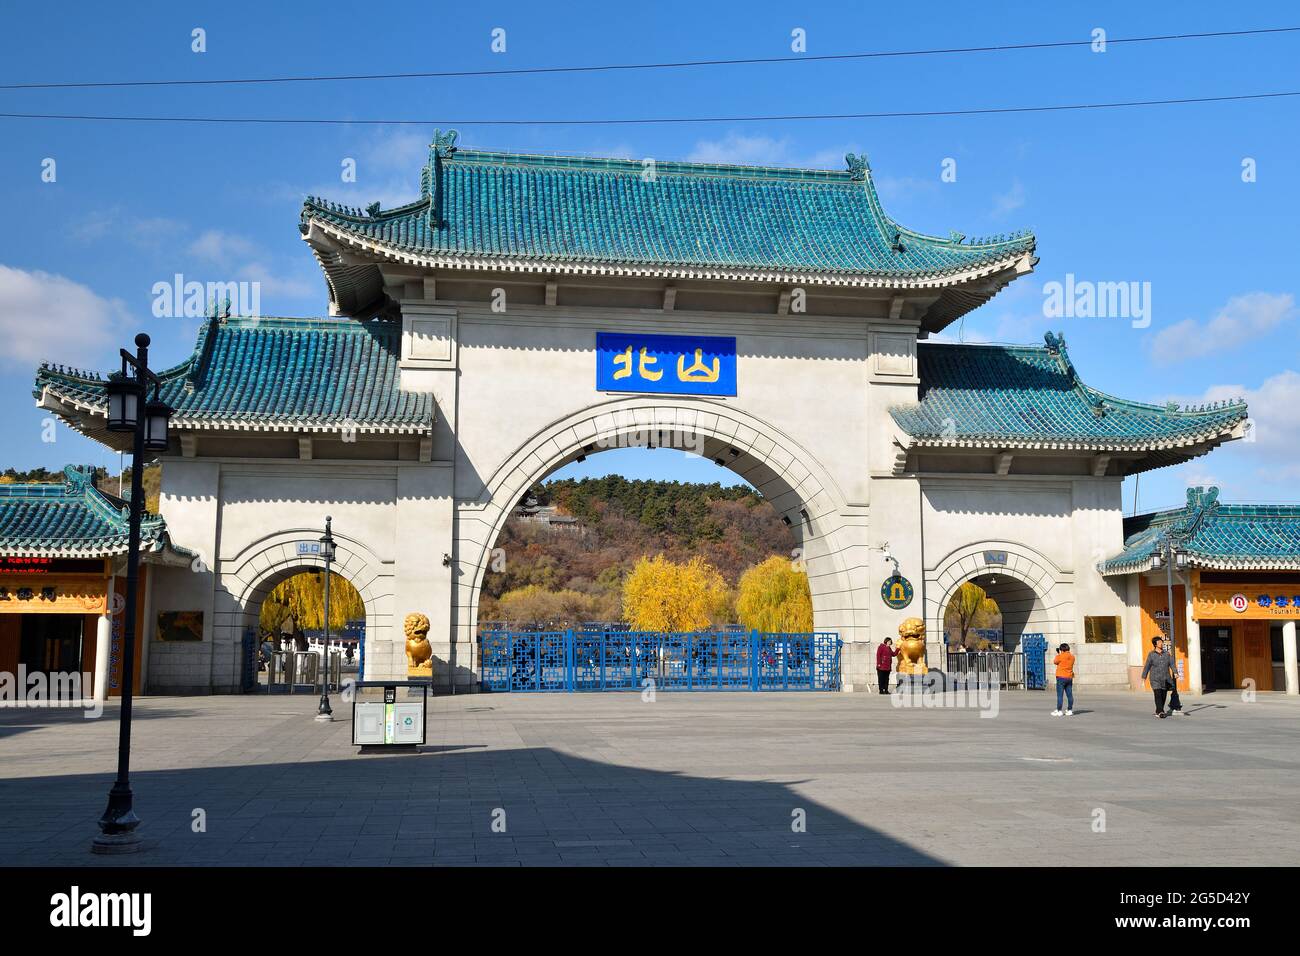 View of Jilin Stock Photo